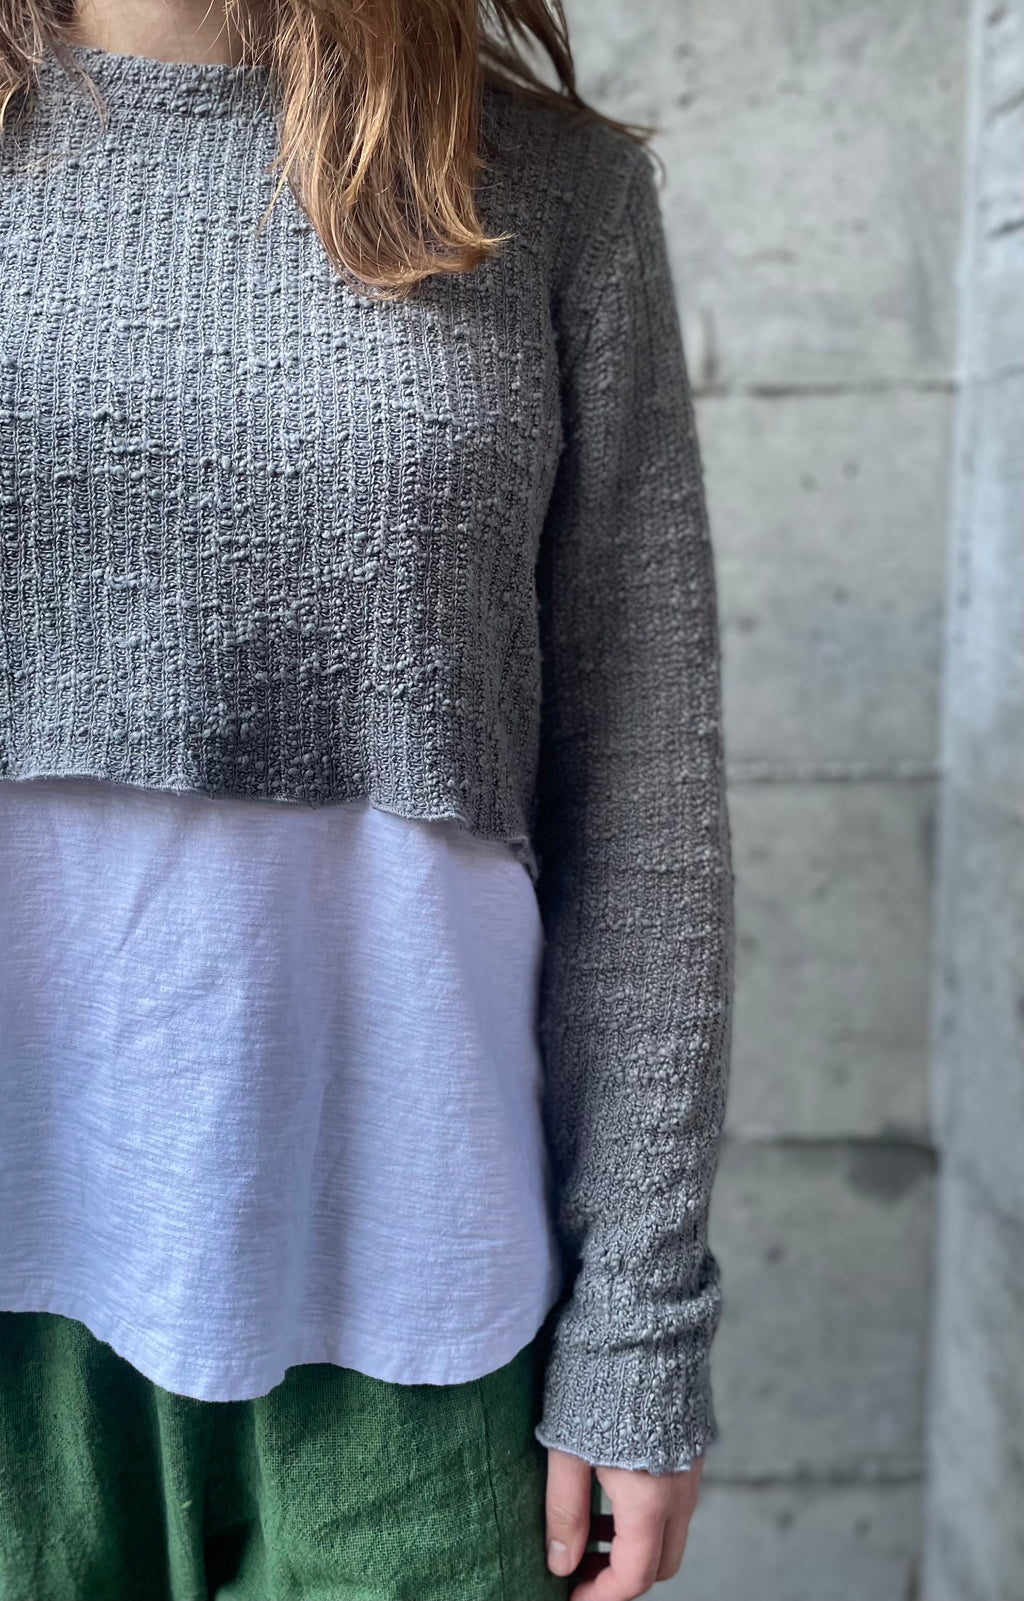 Curved Crop Sweater